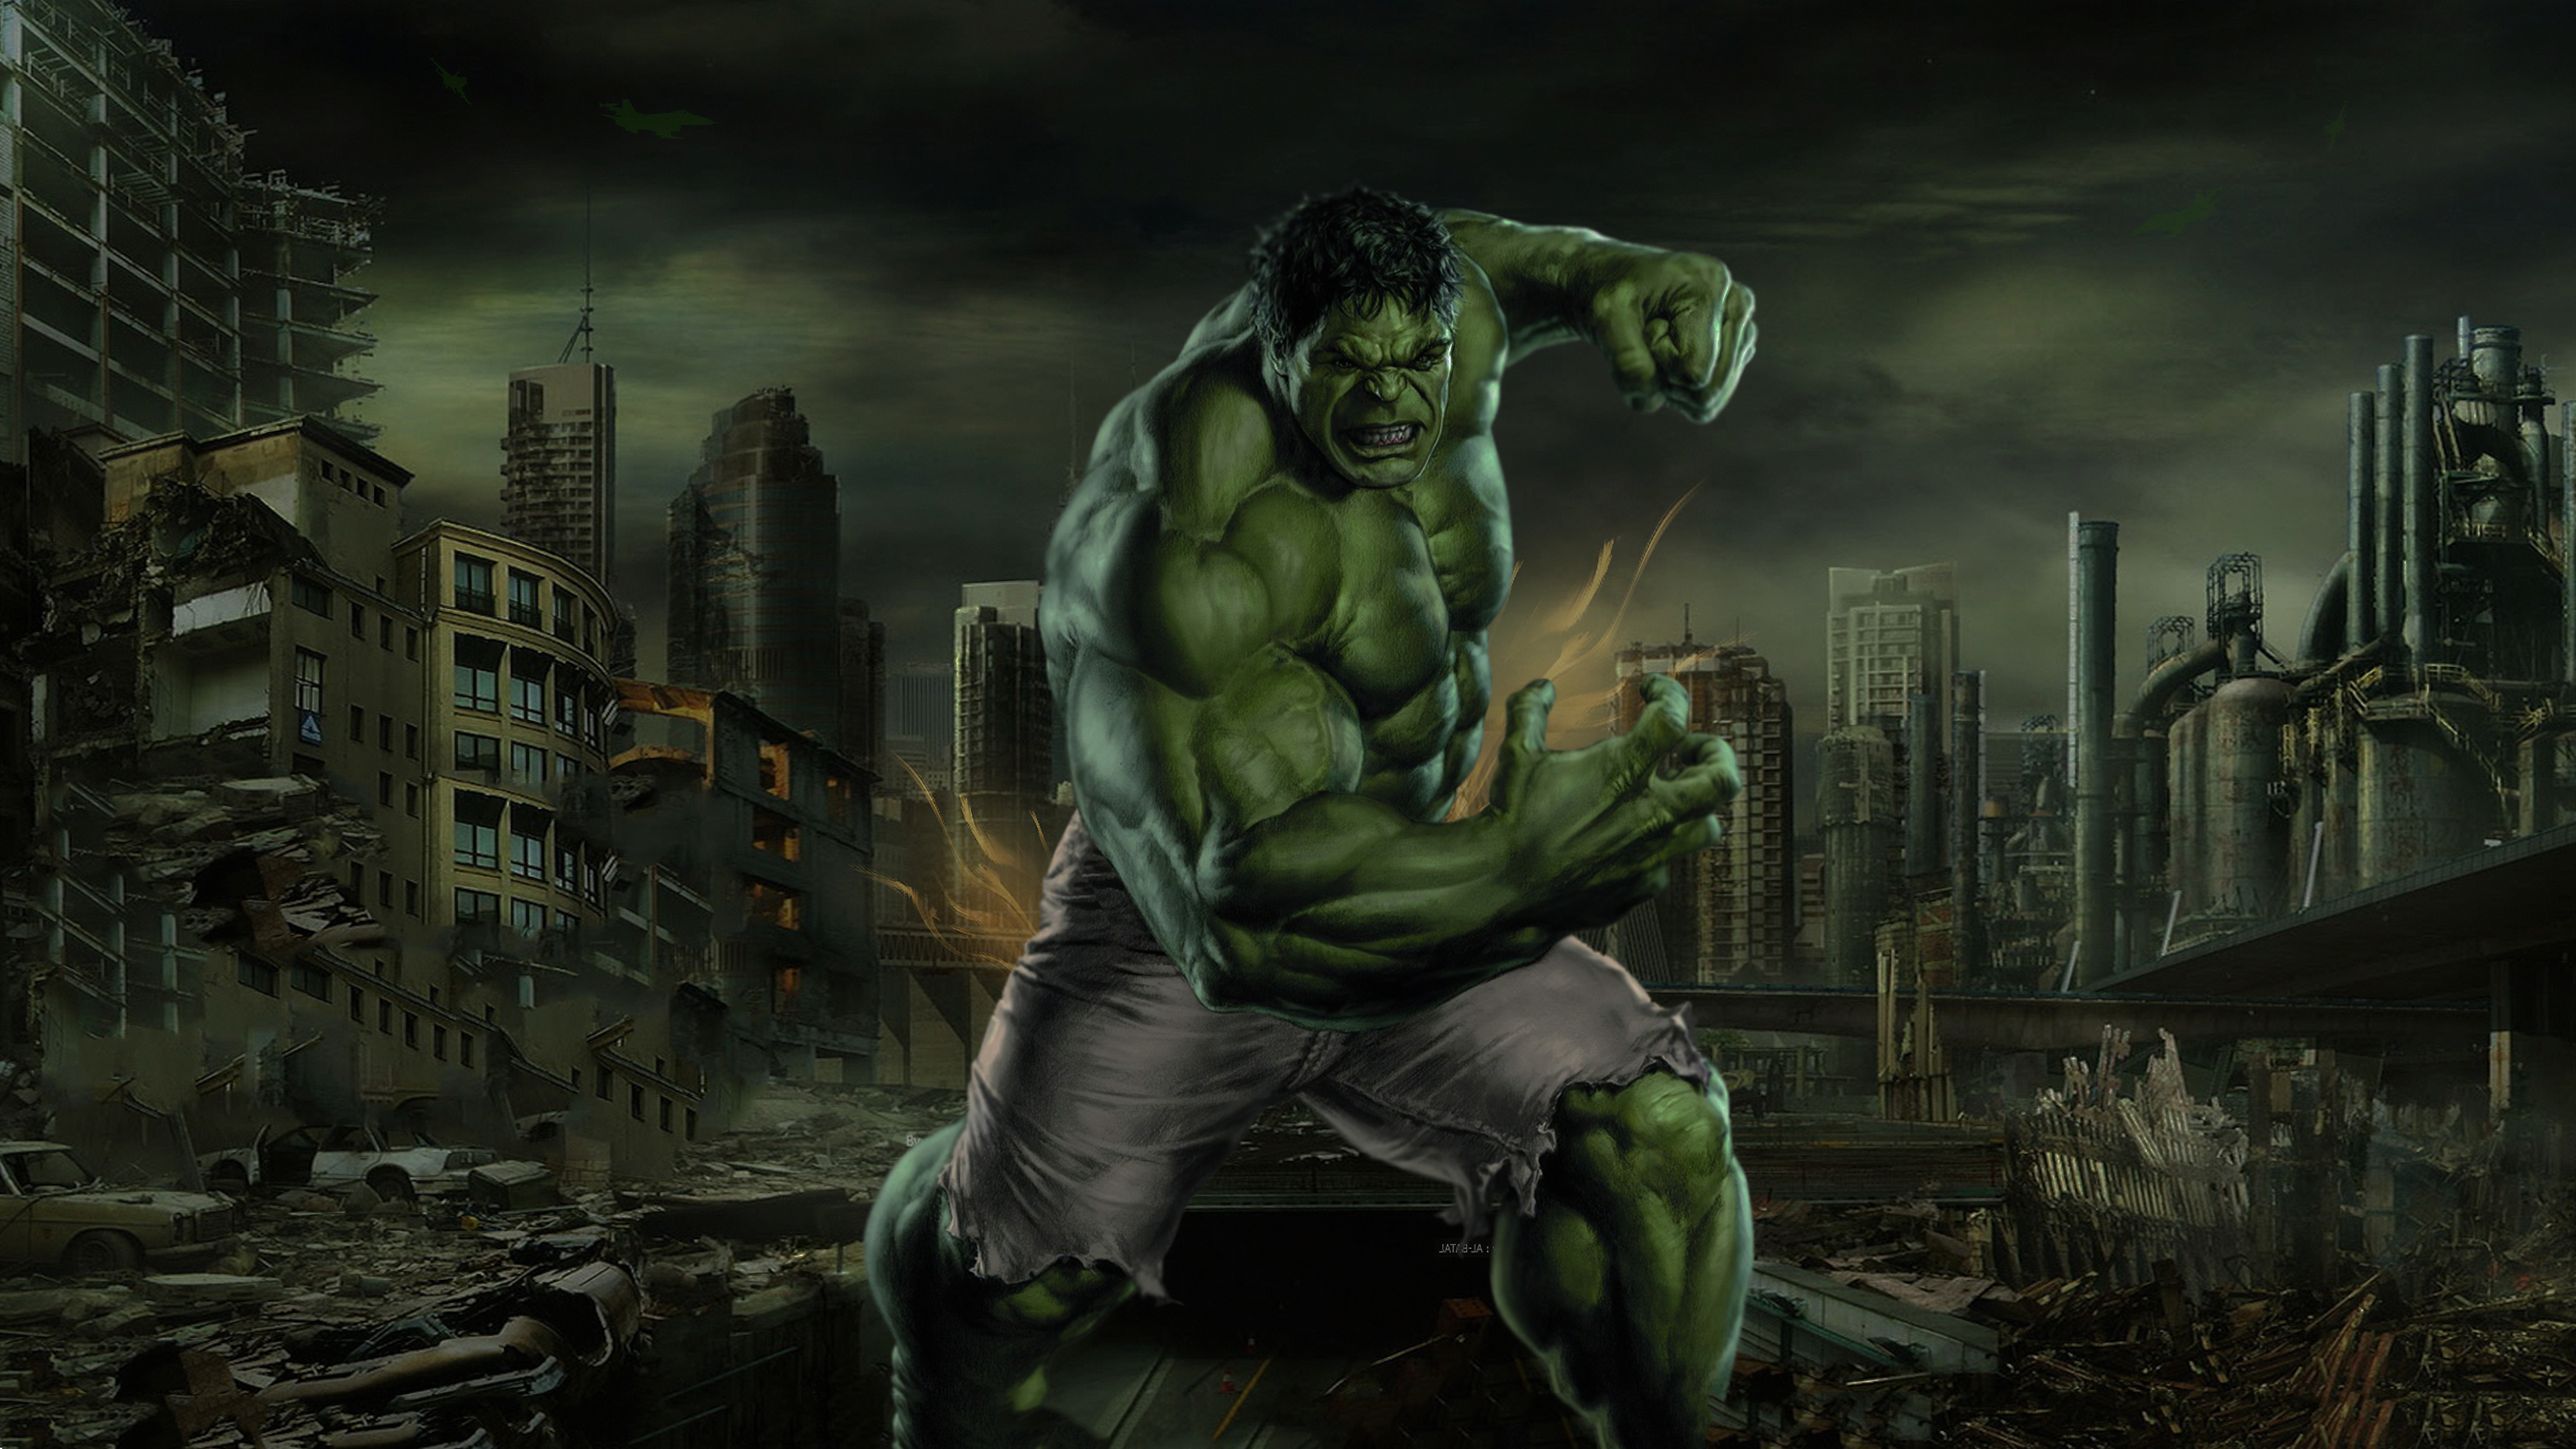 Hulk Marvel Wallpaper, HD Superheroes 4K Wallpapers, Images, Photos and